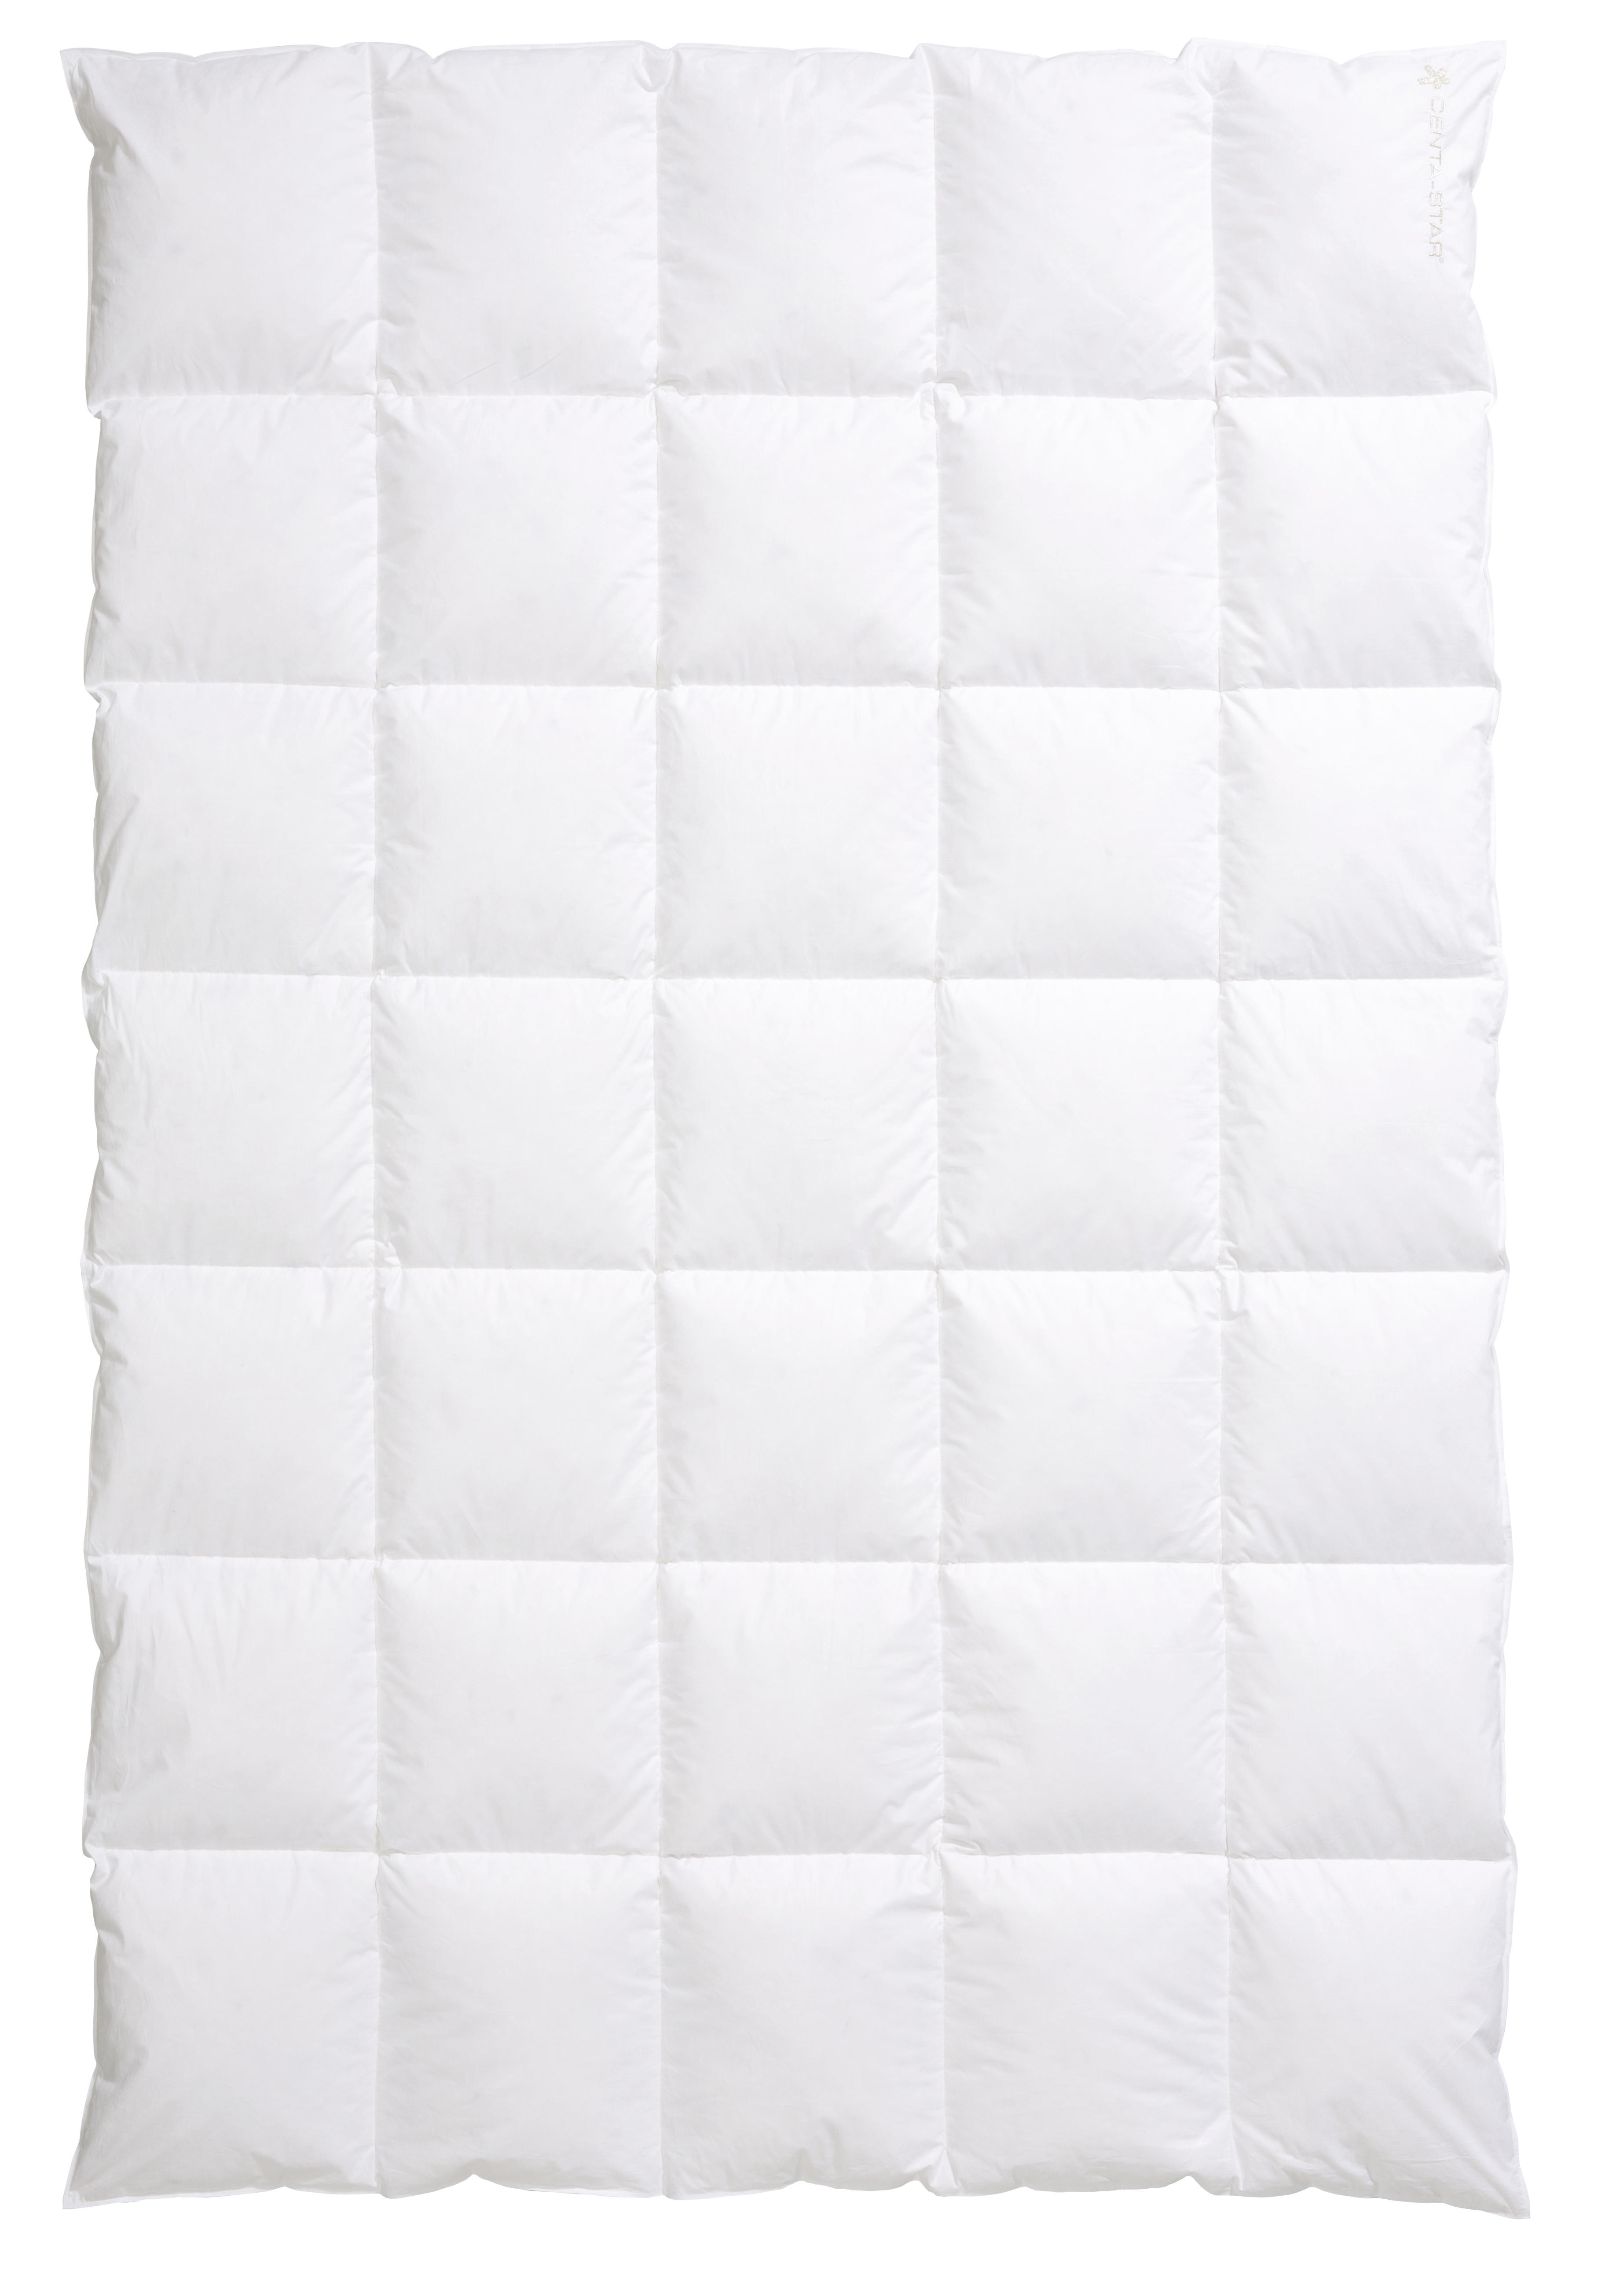 DAUNENDECKE  Harmony  155/220 cm   - Weiß, Basics, Textil (155/220cm) - Centa-Star